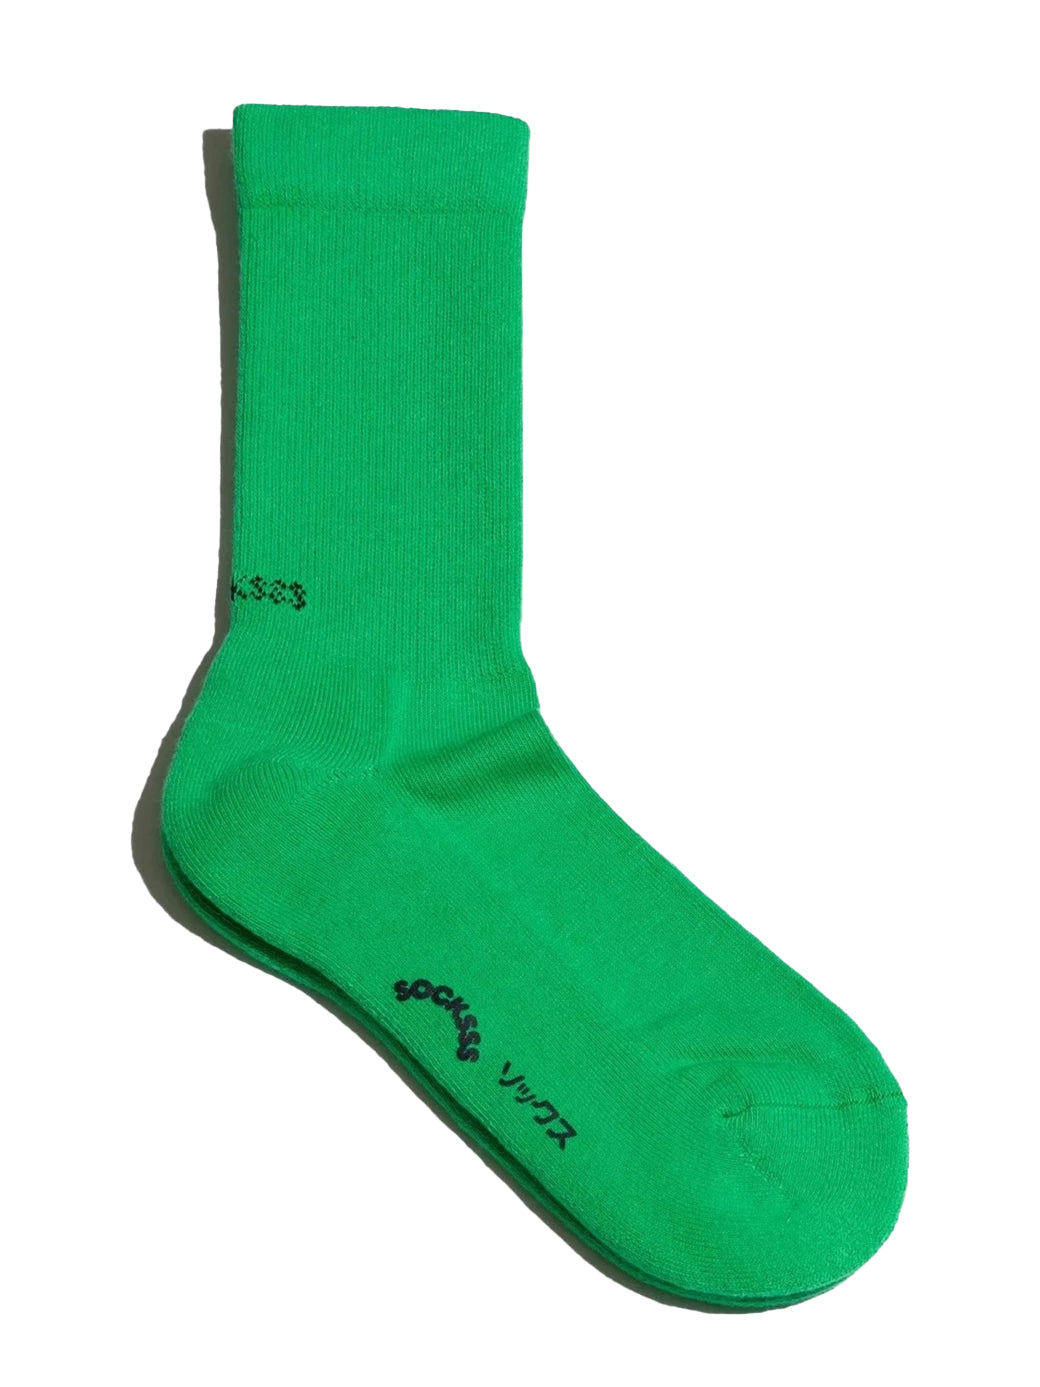 'Applebottom' socks